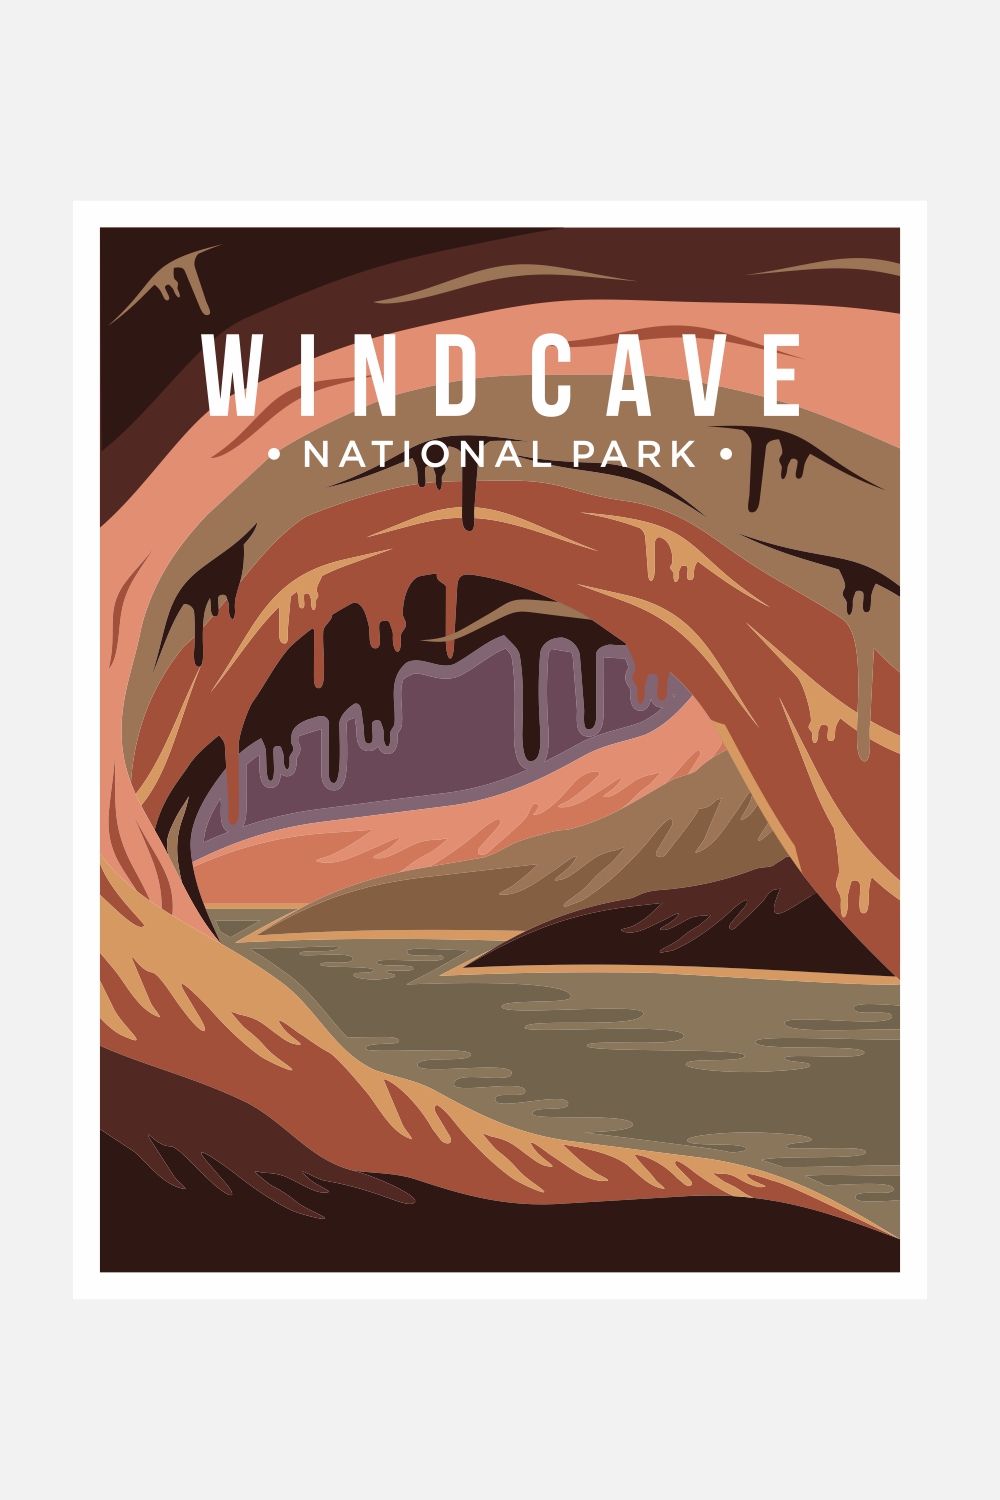 Wind Cave National Park poster vector illustration design – Only $8 pinterest preview image.